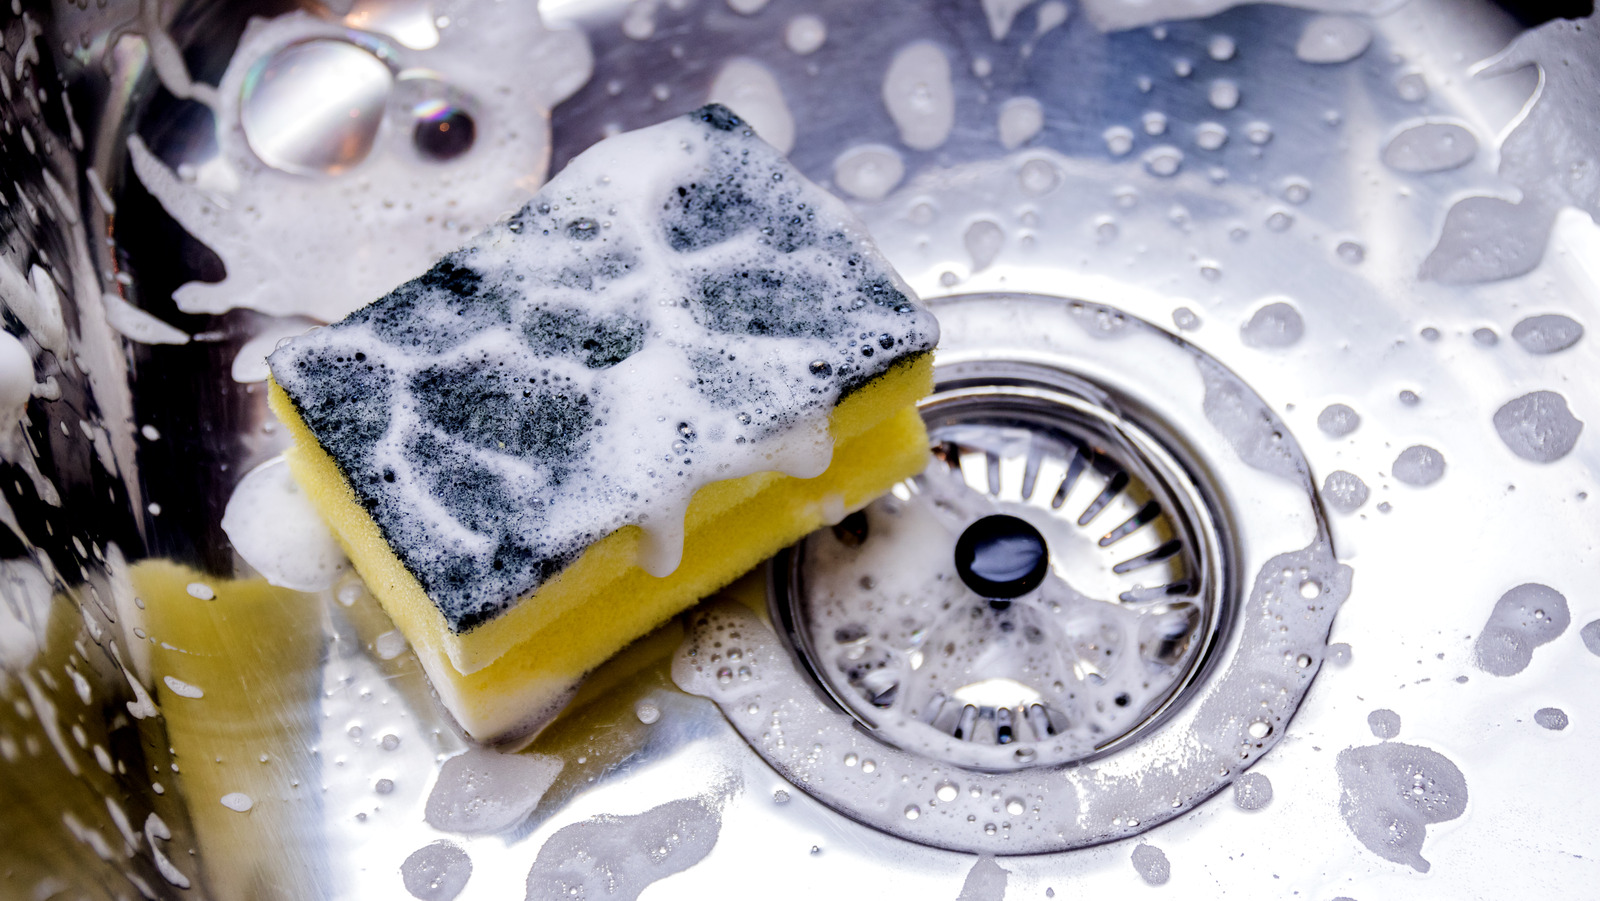 Draining Sponge Tray Keeps Your Sponge Dry